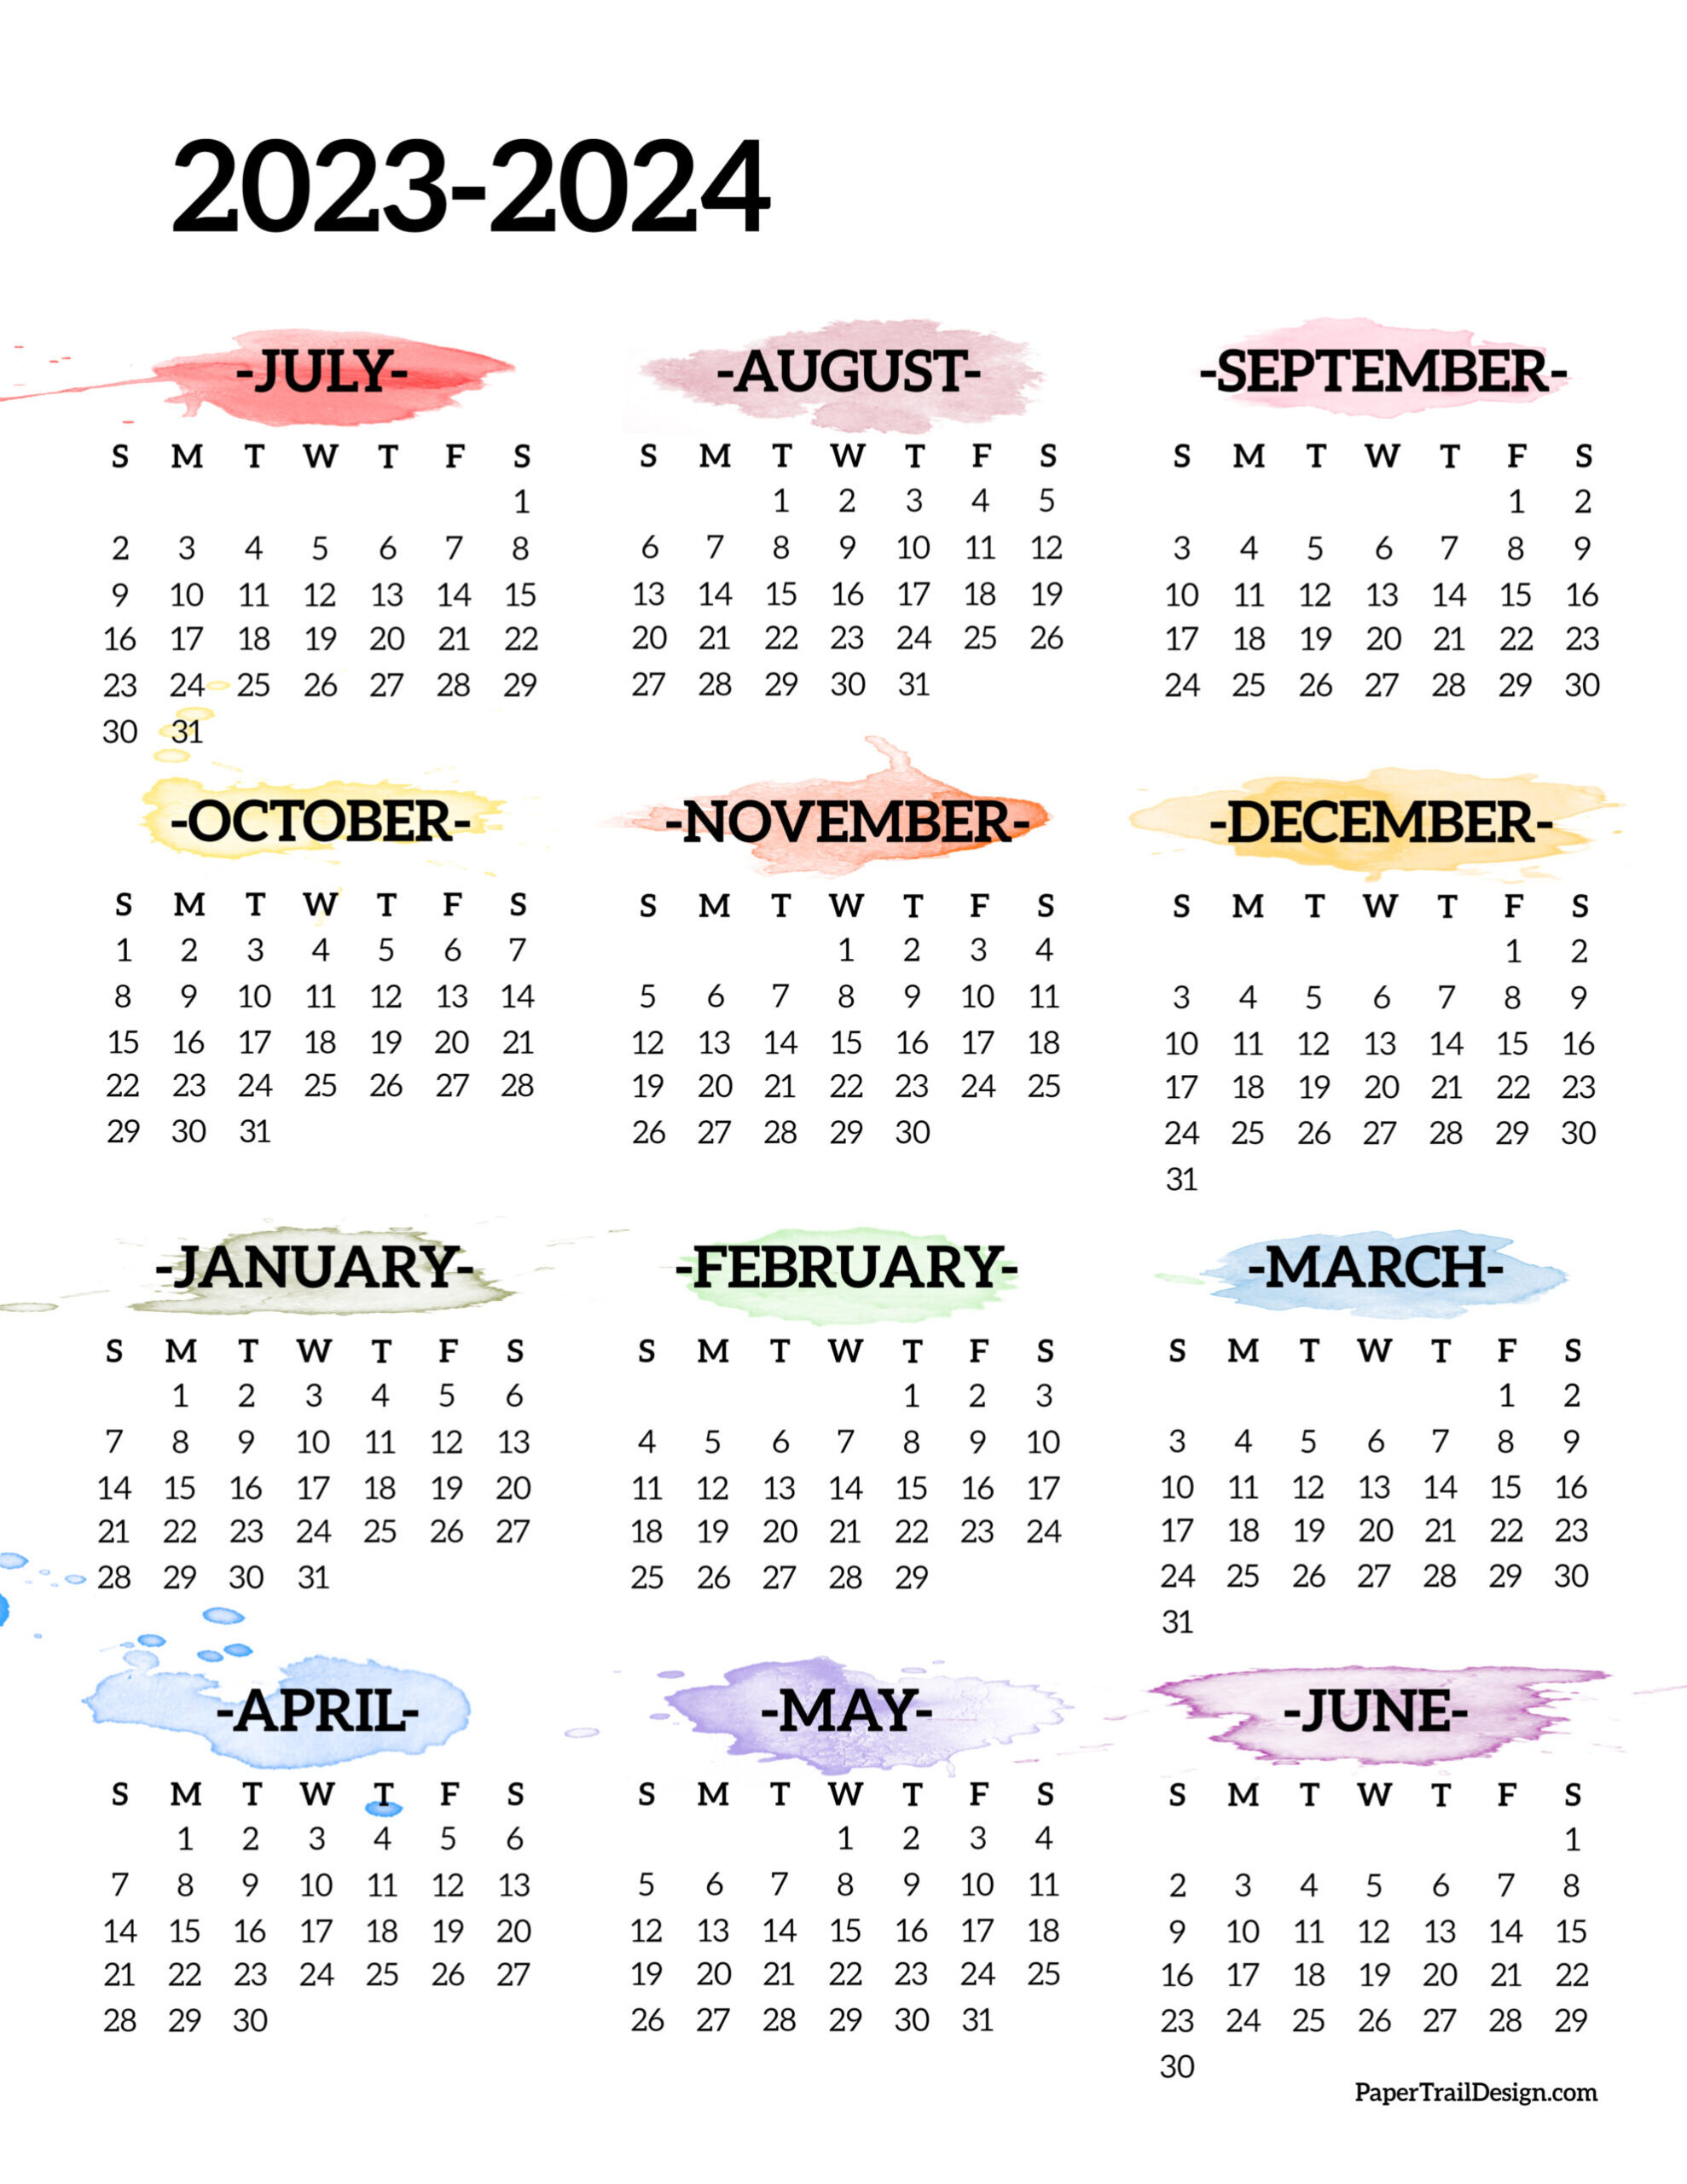 2023-2024 School Year Calendar Free Printable - Paper Trail Design for Printable Calendar August 2023-May 2024